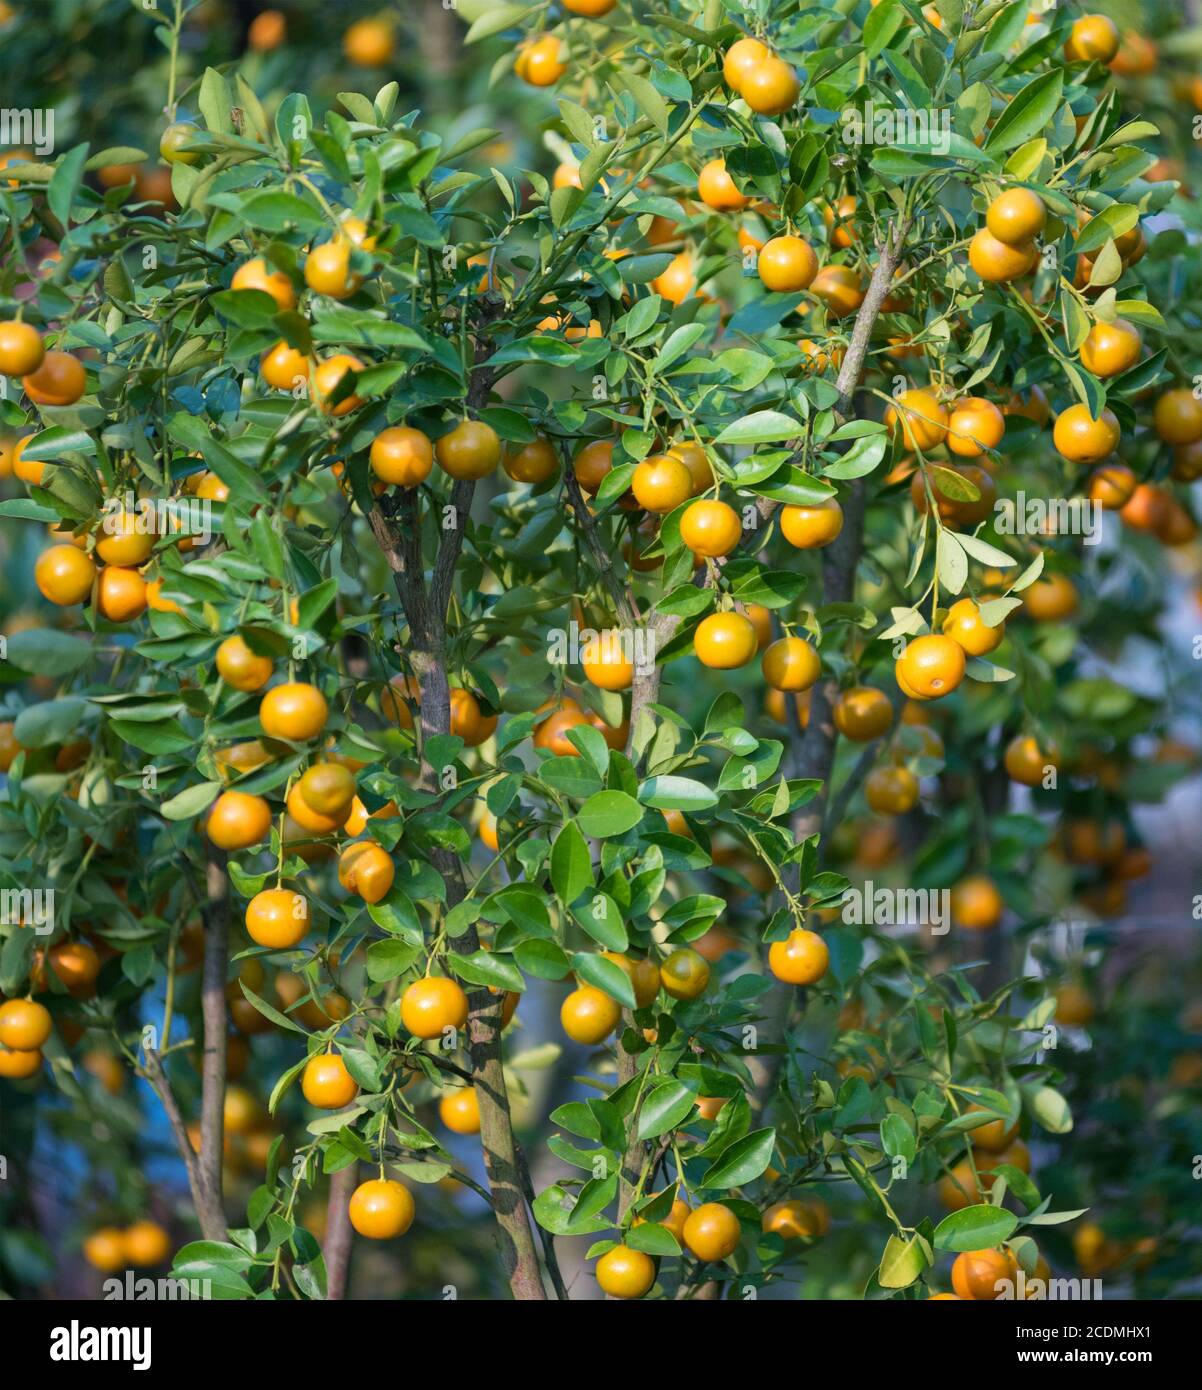 Arbre de kumquat - symbole de Tet (nouvel an vietnamien) Banque D'Images